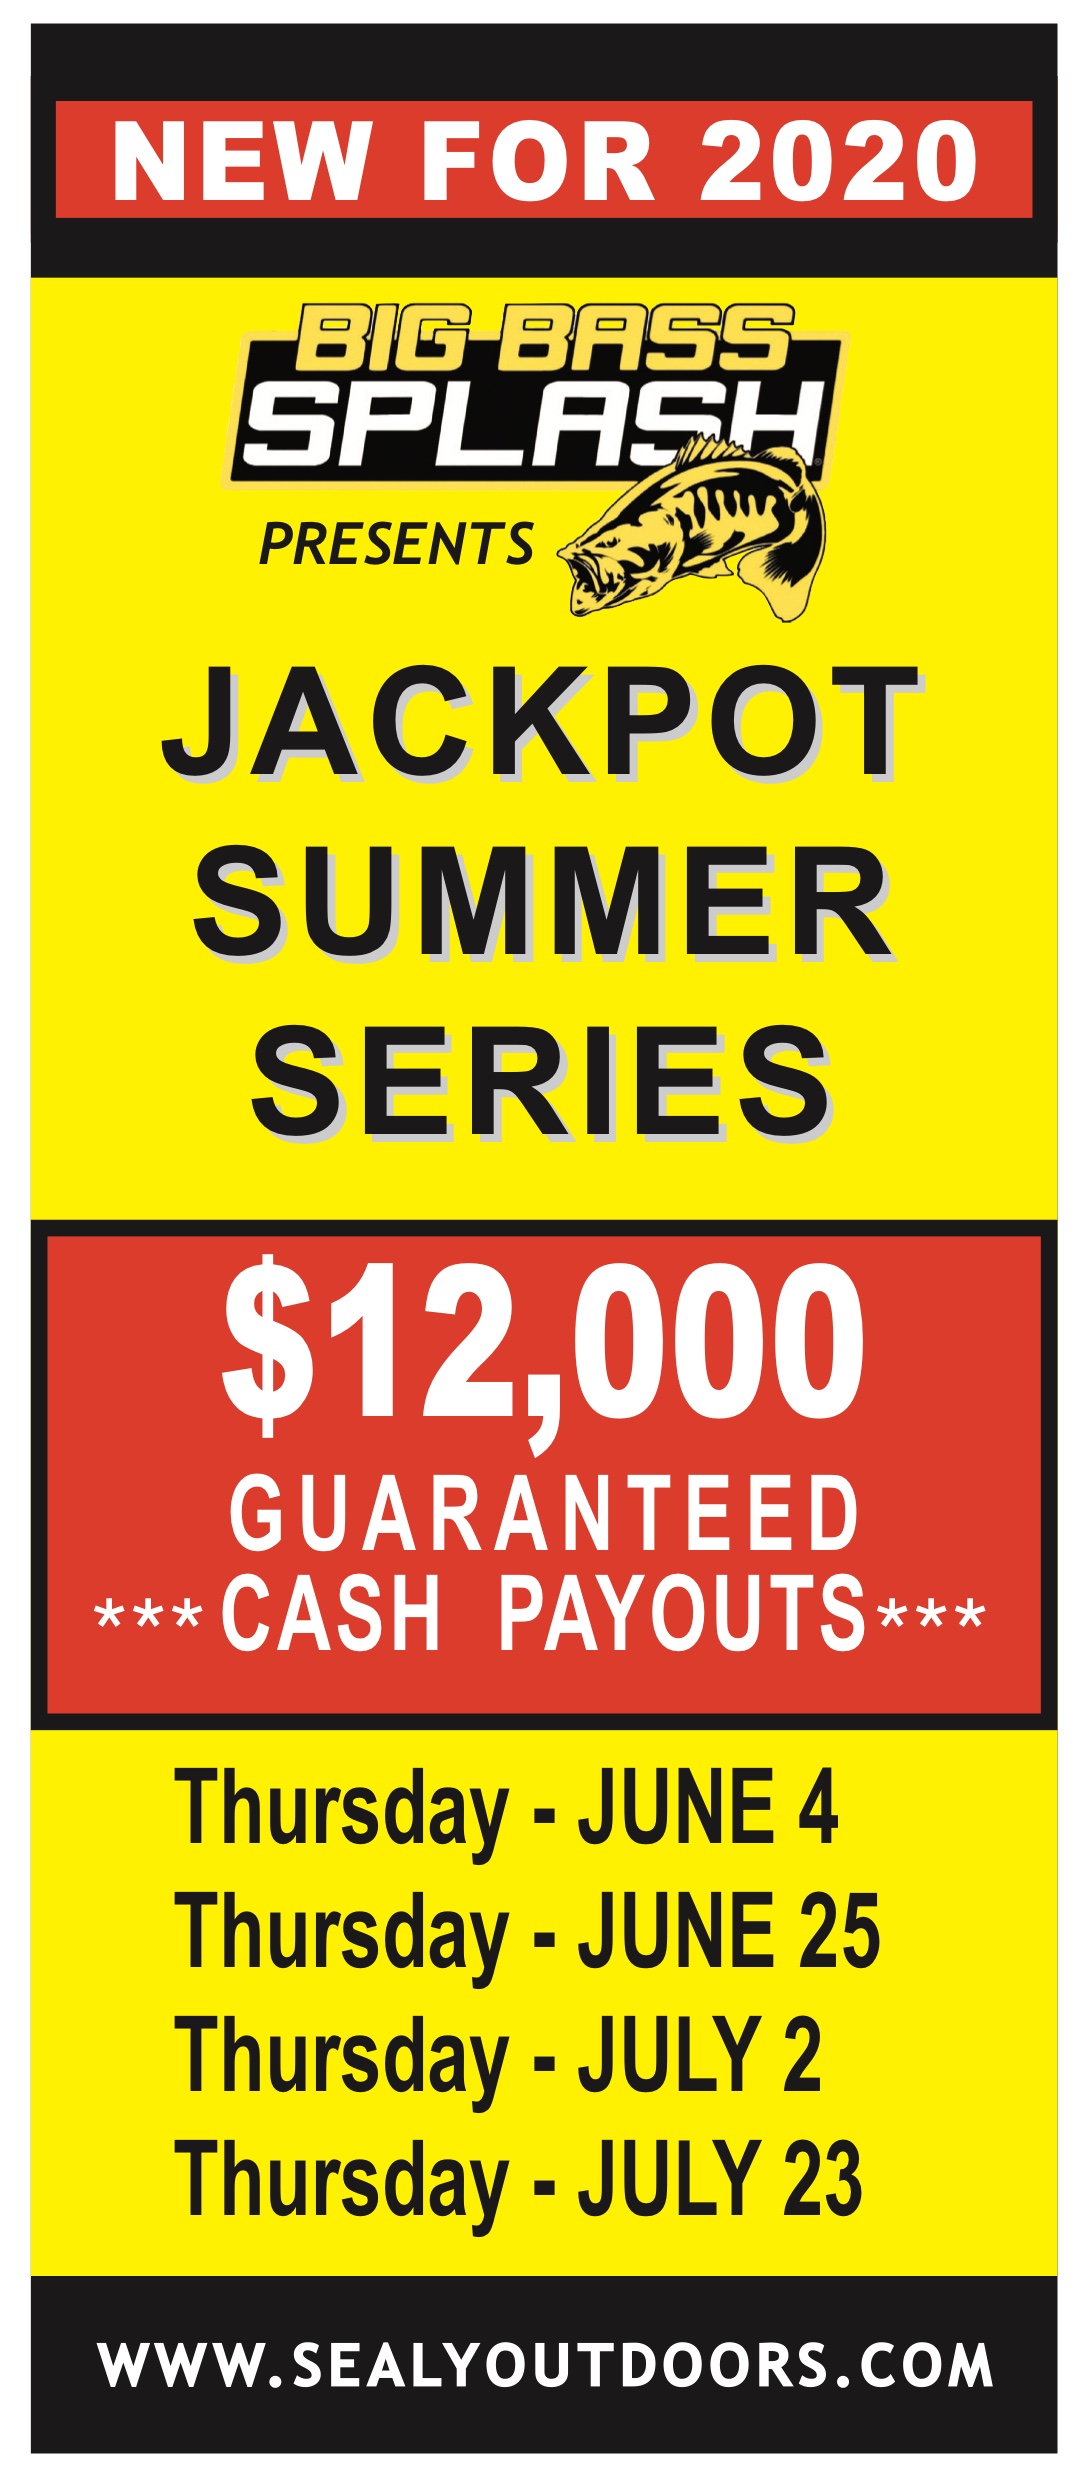 Jackpot Summer Series Sealy Outdoors